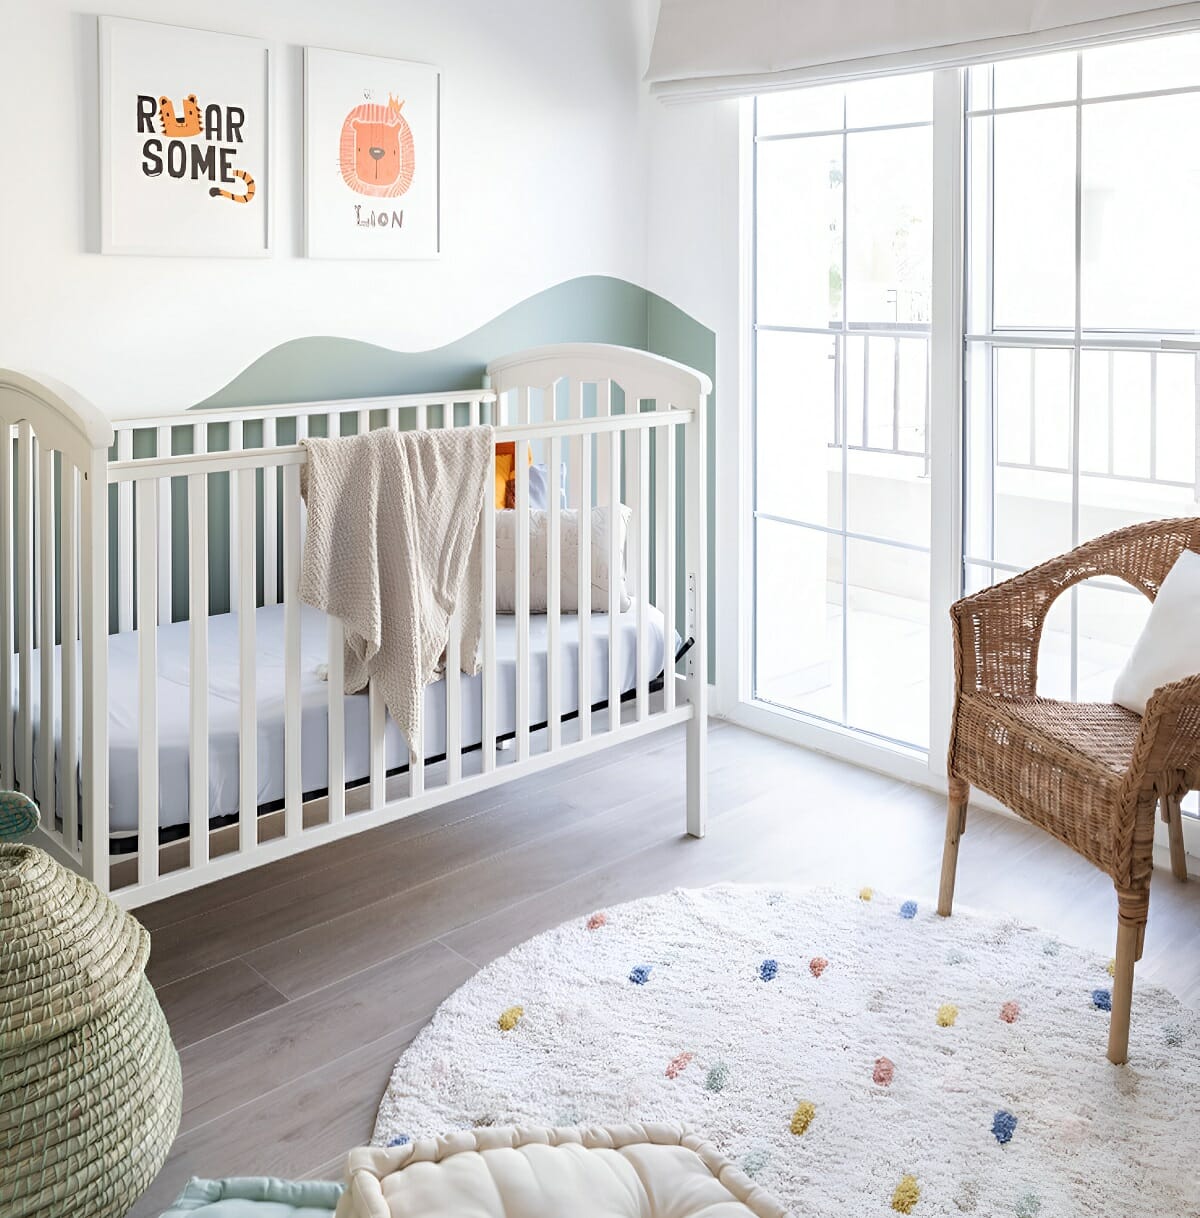 Cute nursery room ideas with a unique shelf